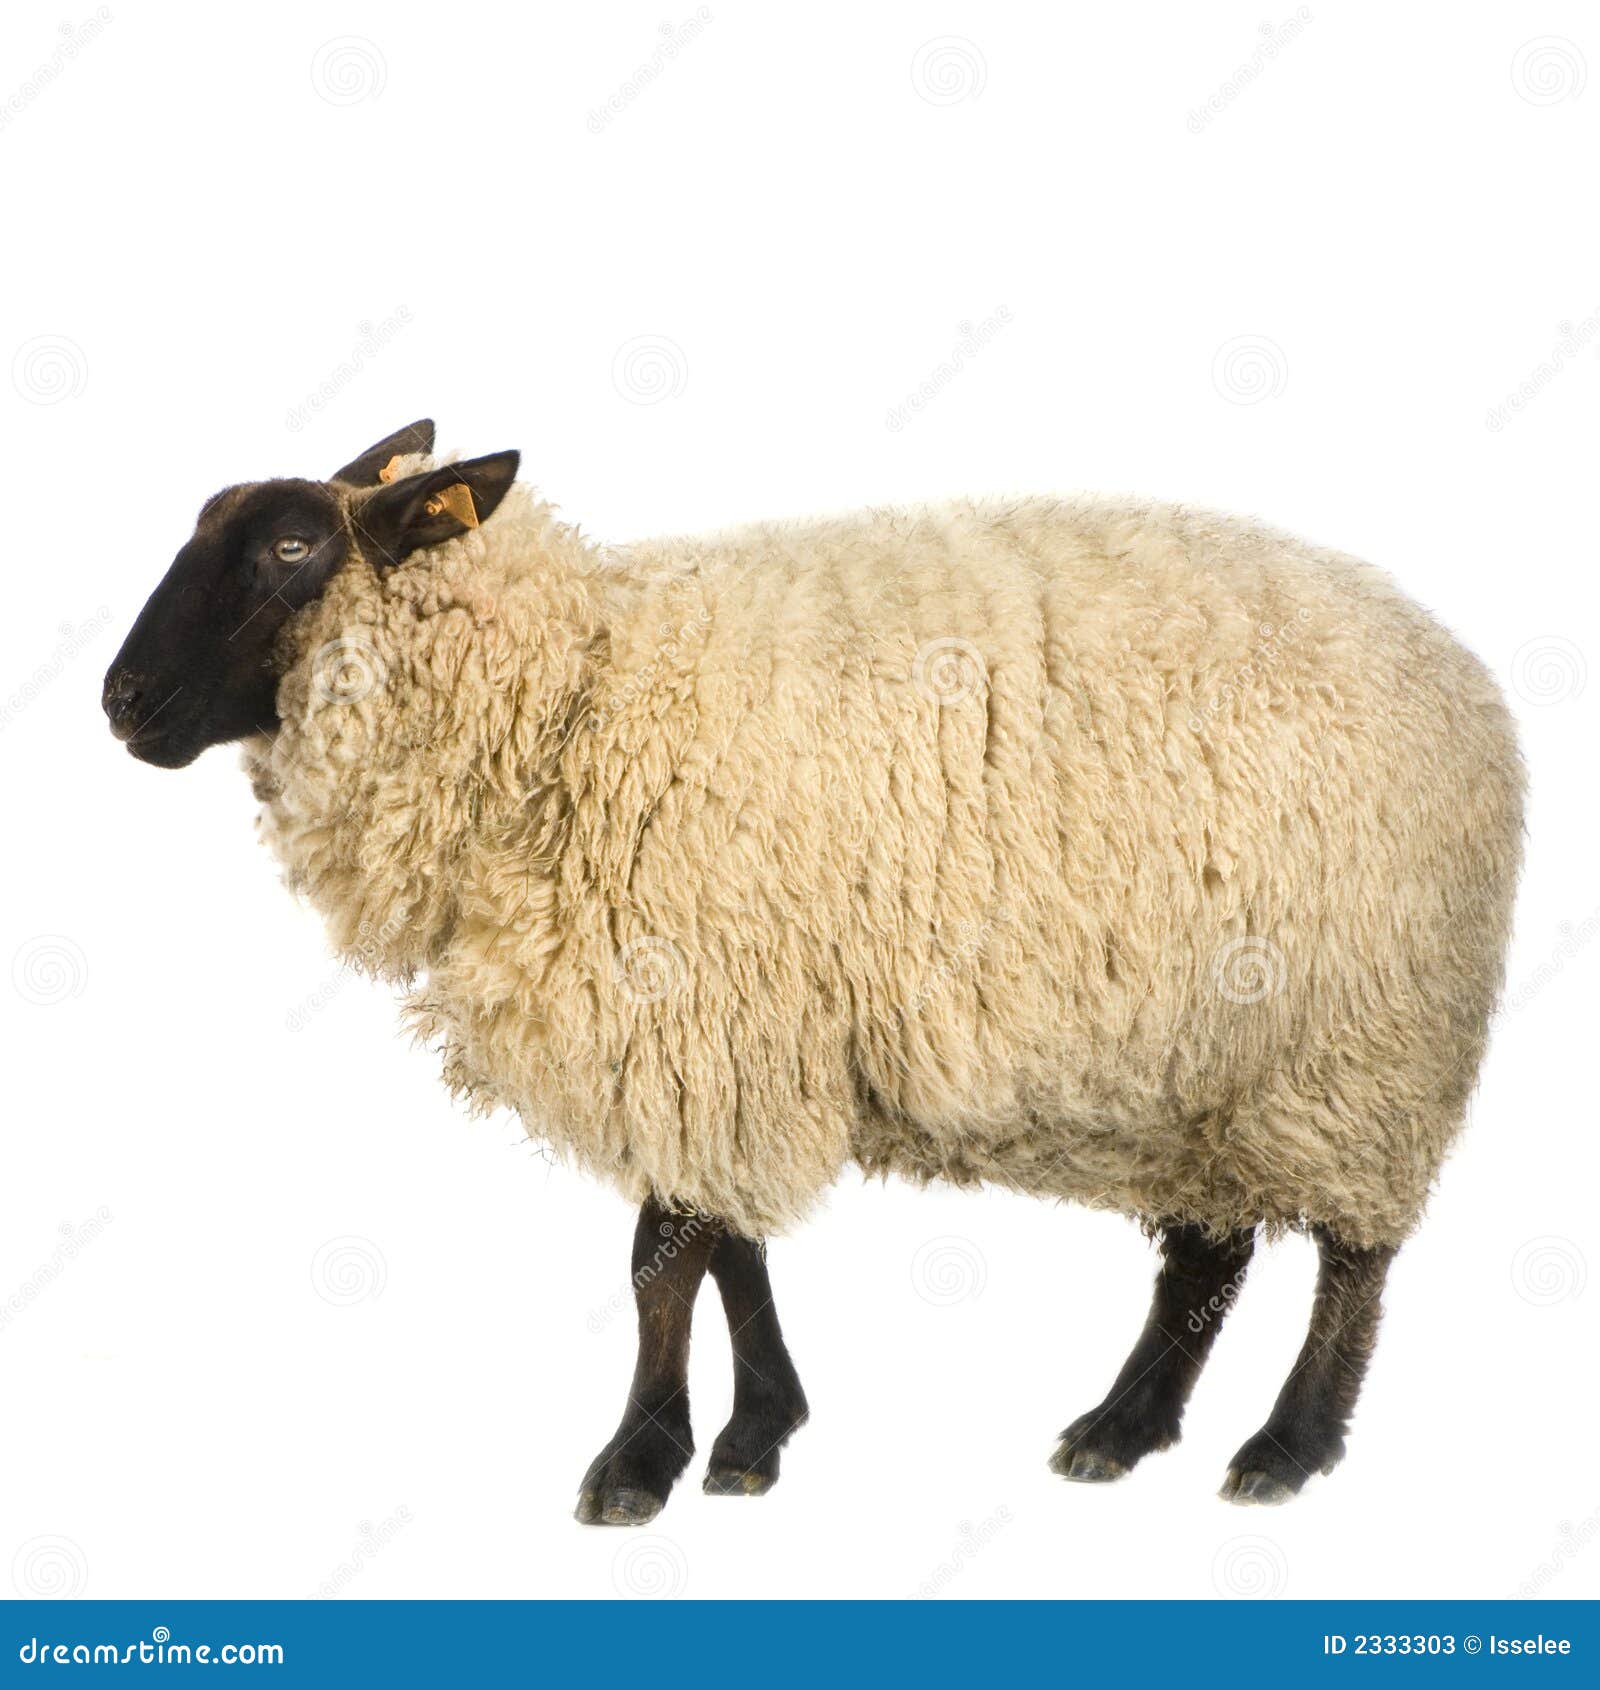 Sheep+Stock+Photos+-+Image:+2333303